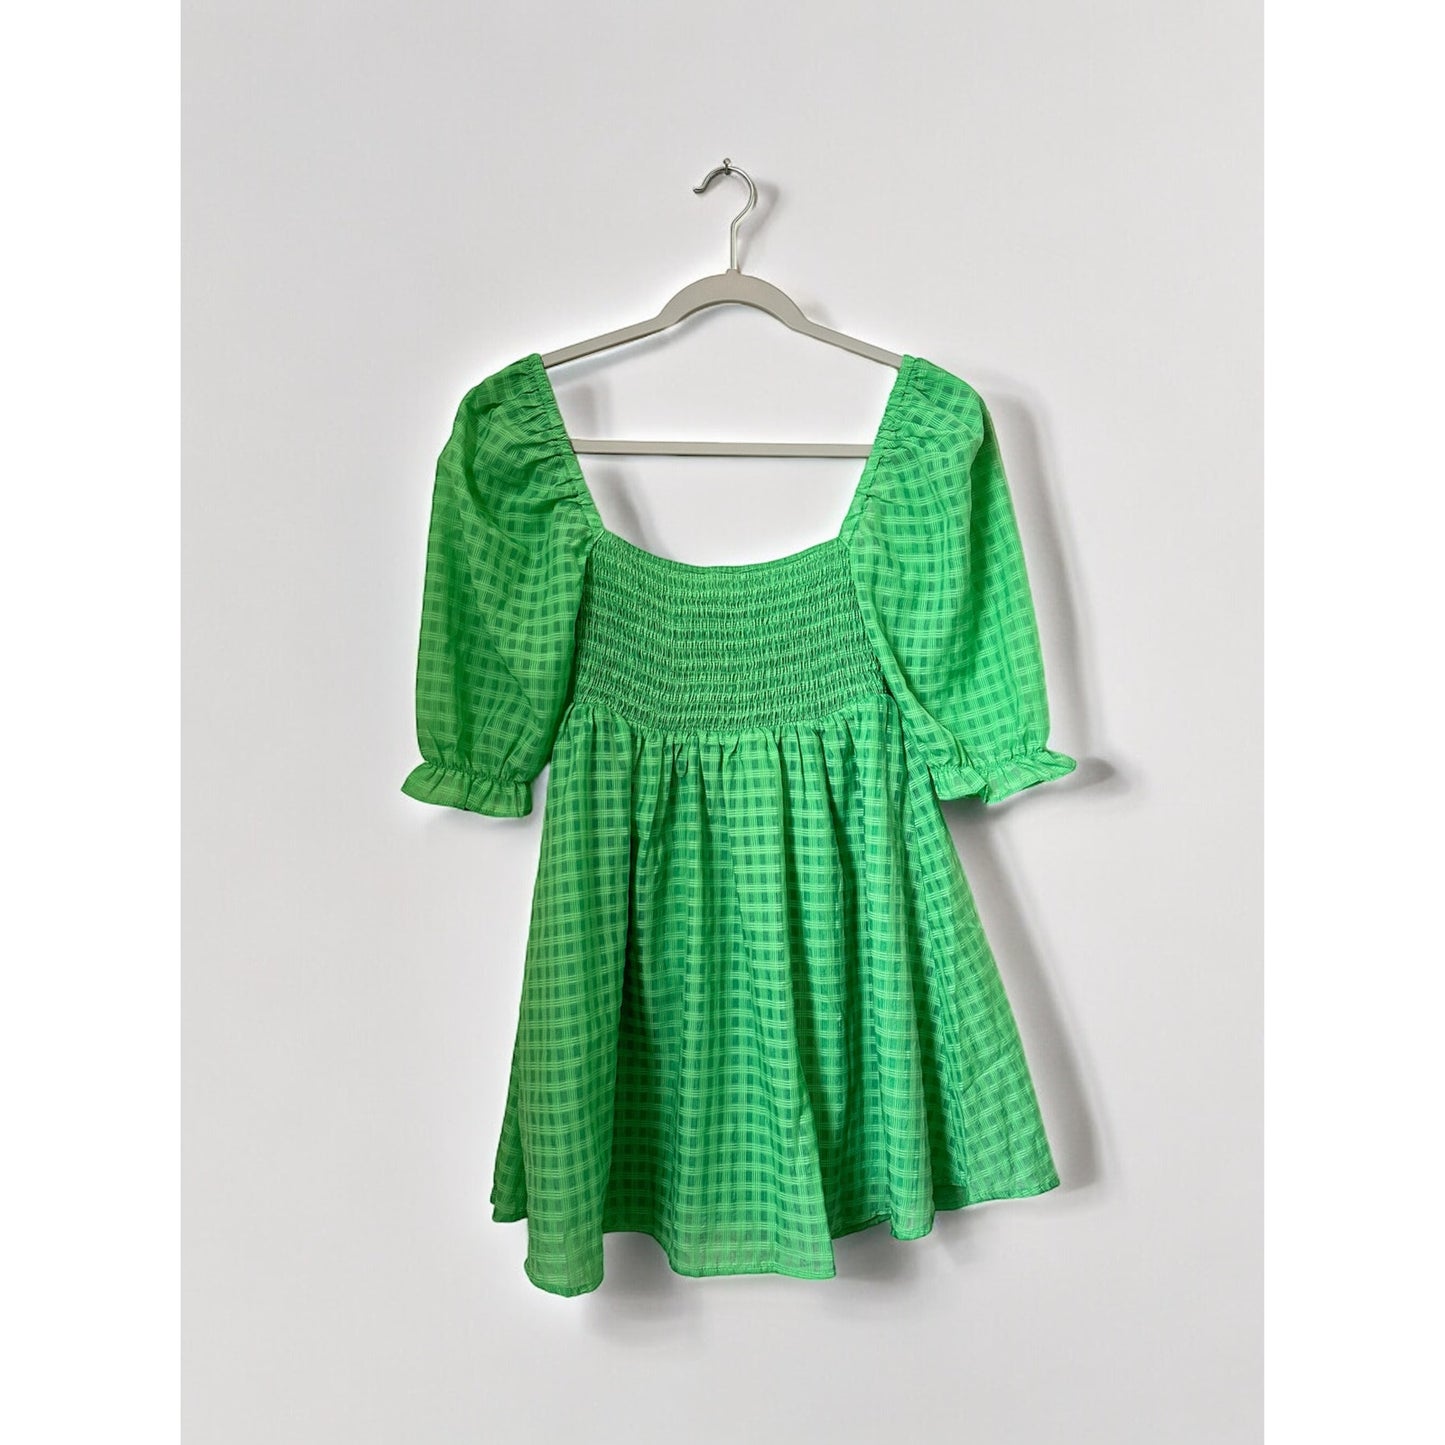 NWT Beginning Boutique Babydoll Dress, Size 0